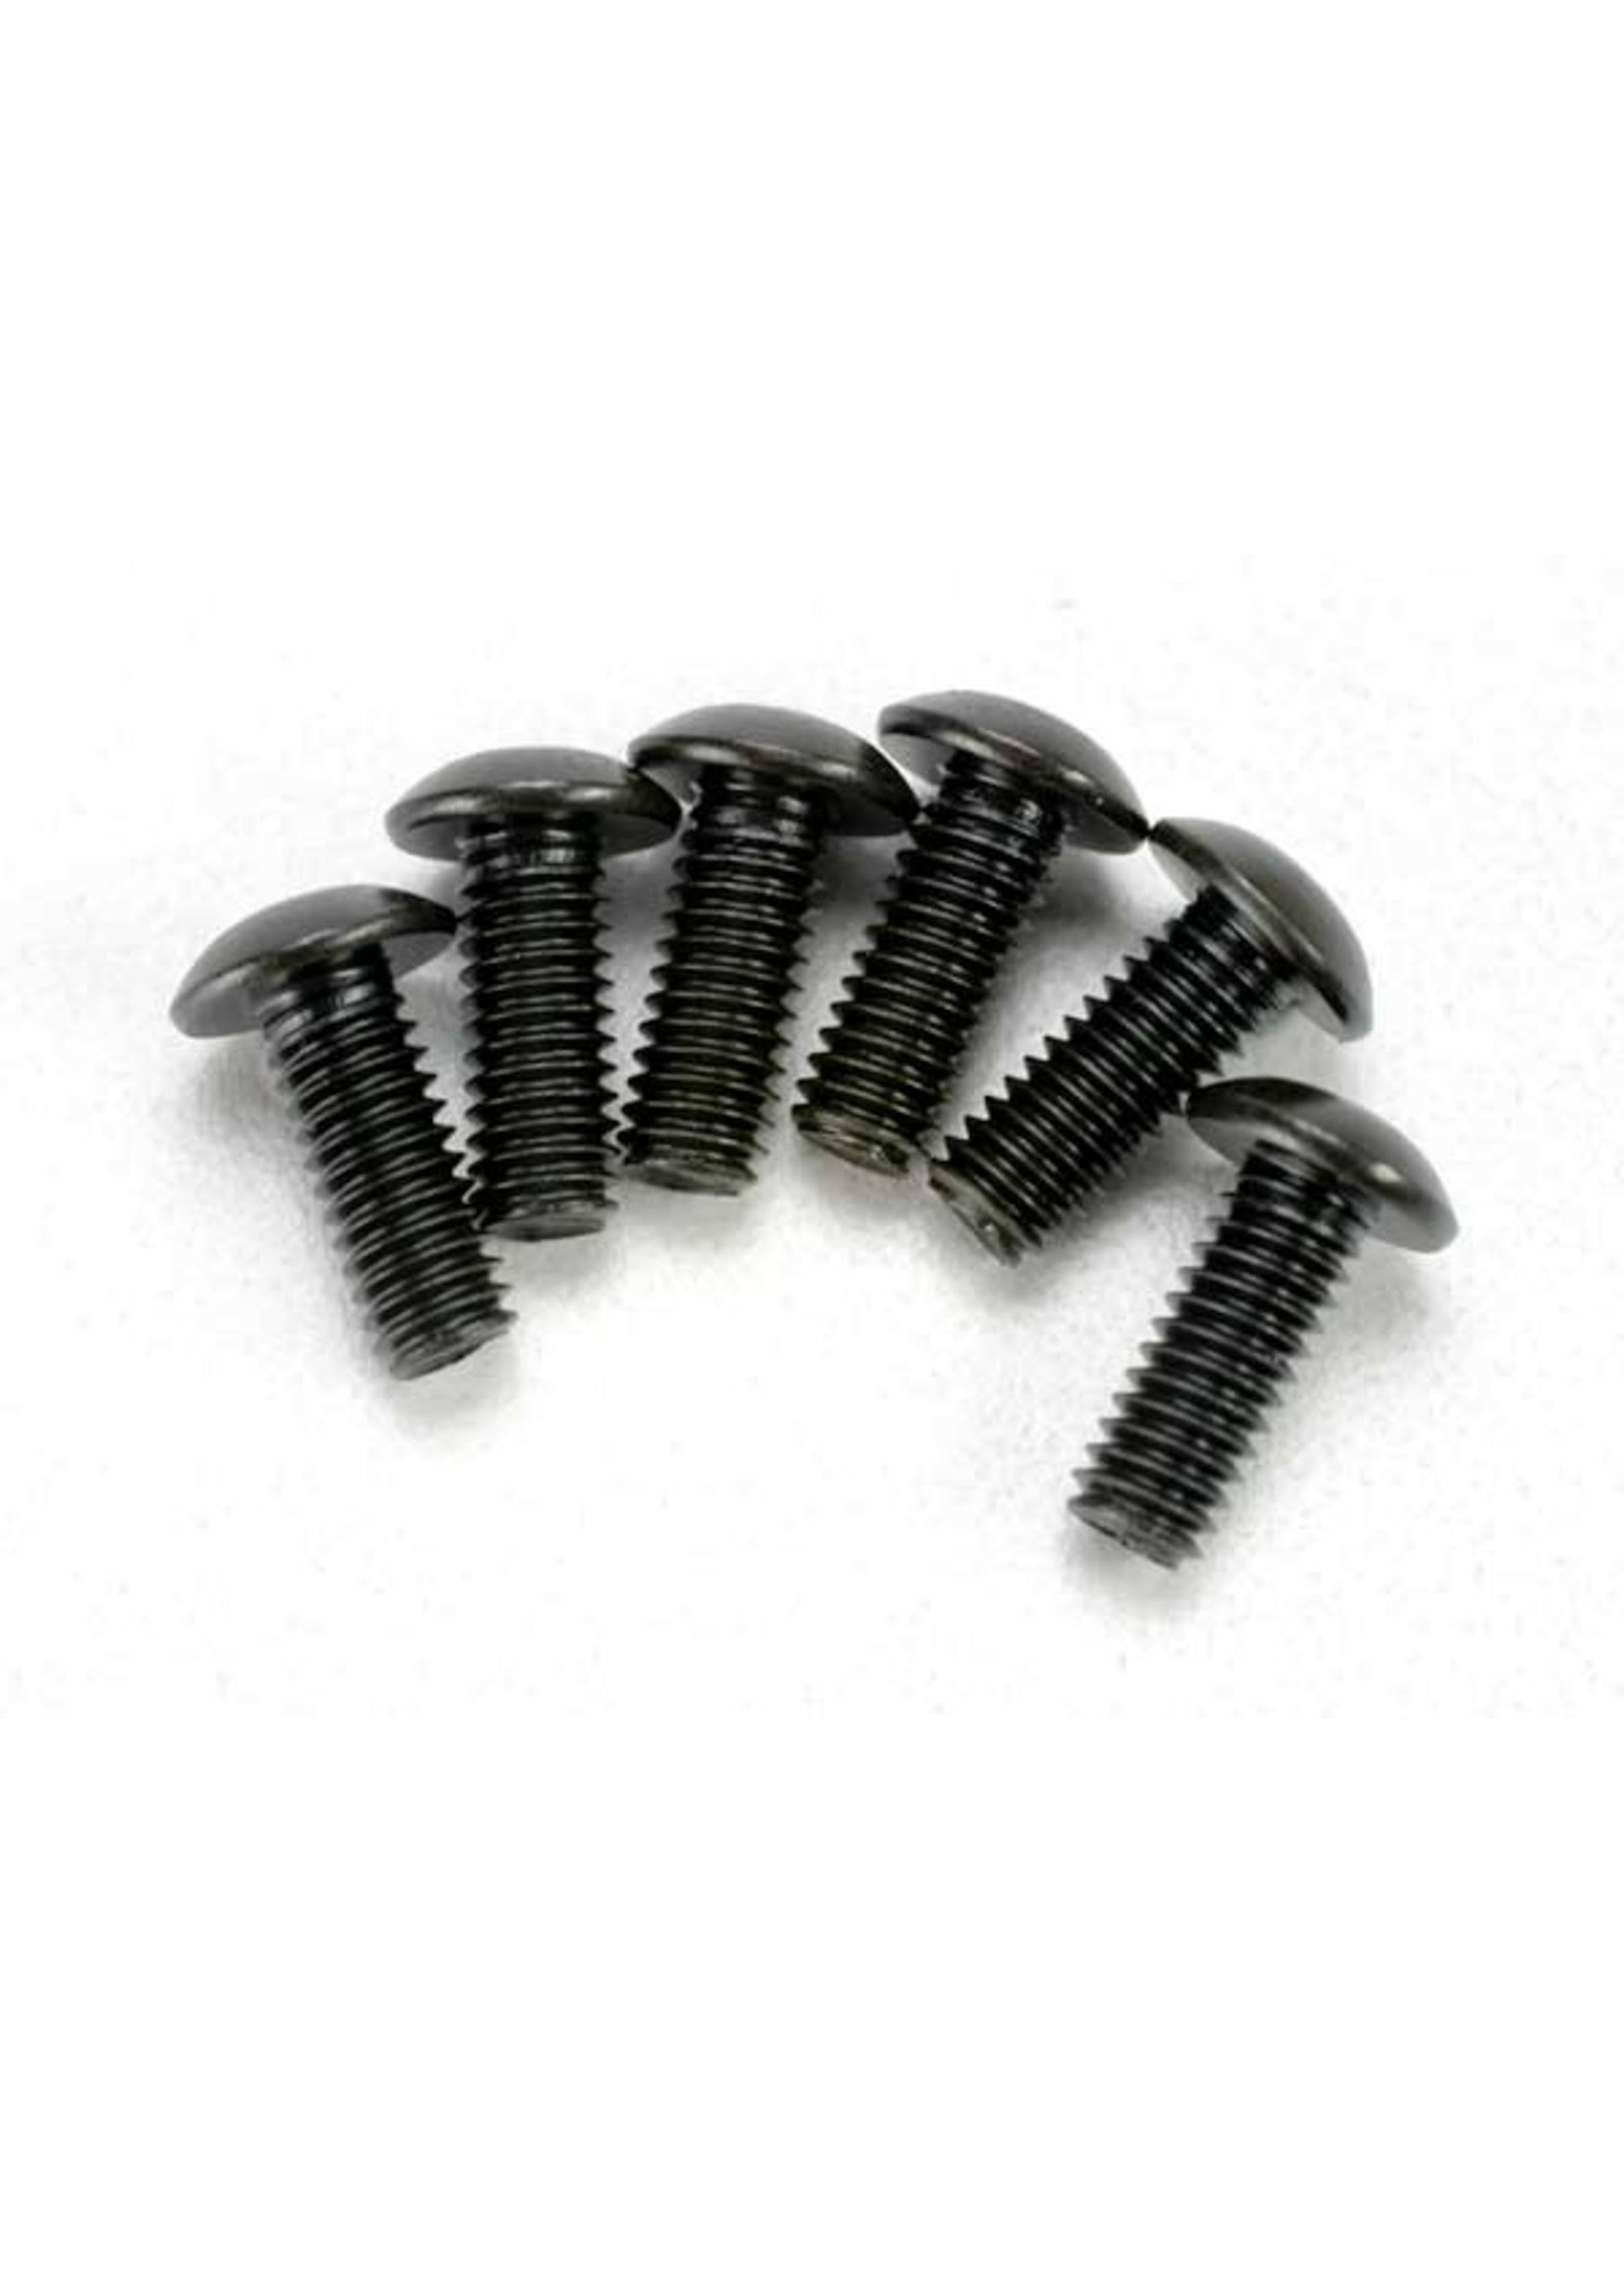 Traxxas 3937 Button Head Machine Screw - Black, 4 X 12mm, 6ct